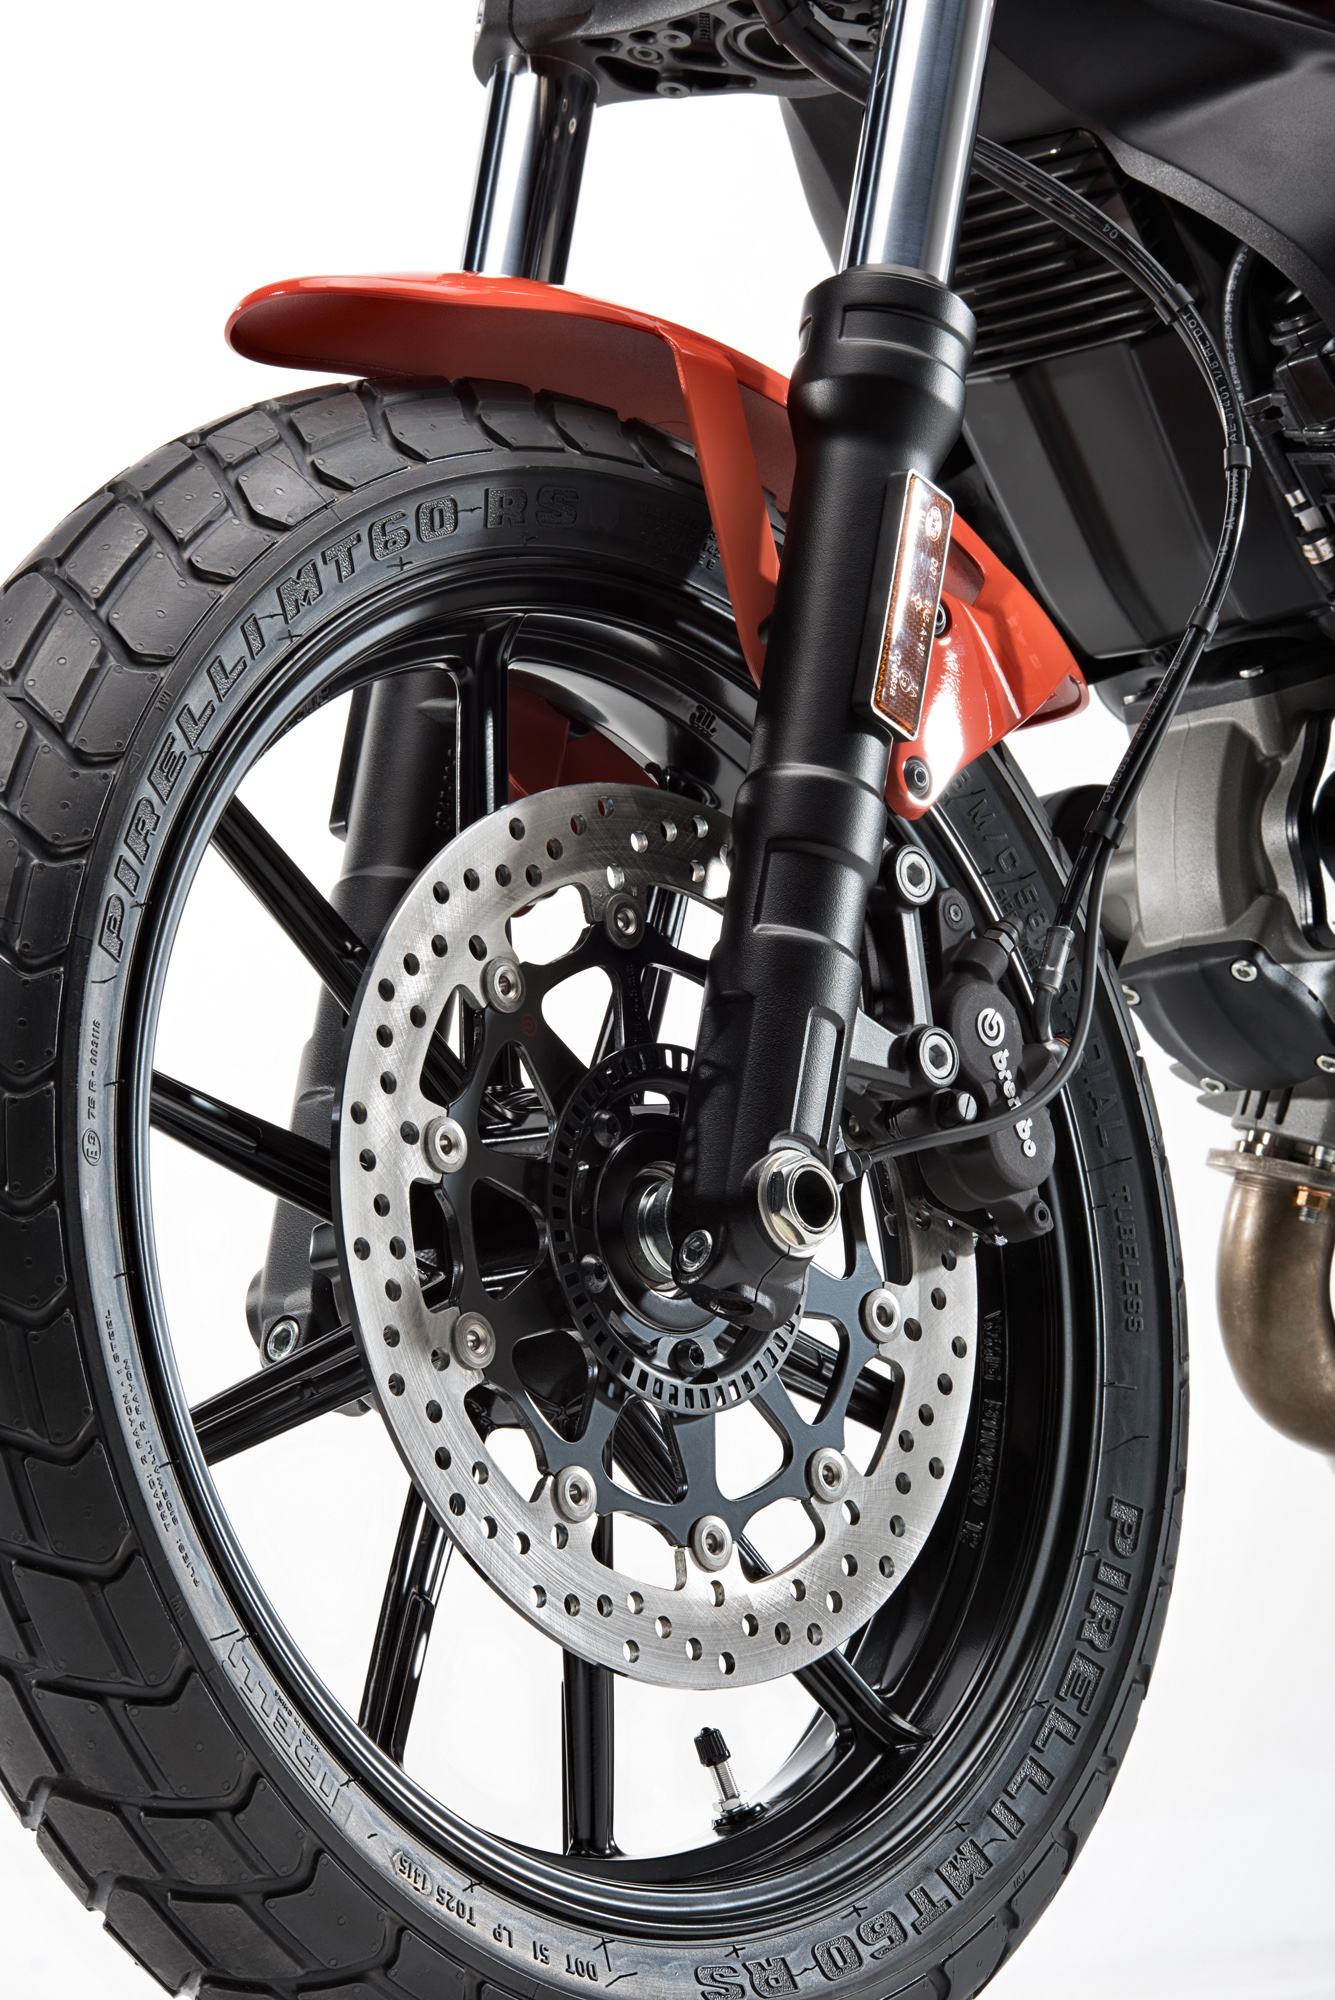 Ducati Scrambler Sixty2 review